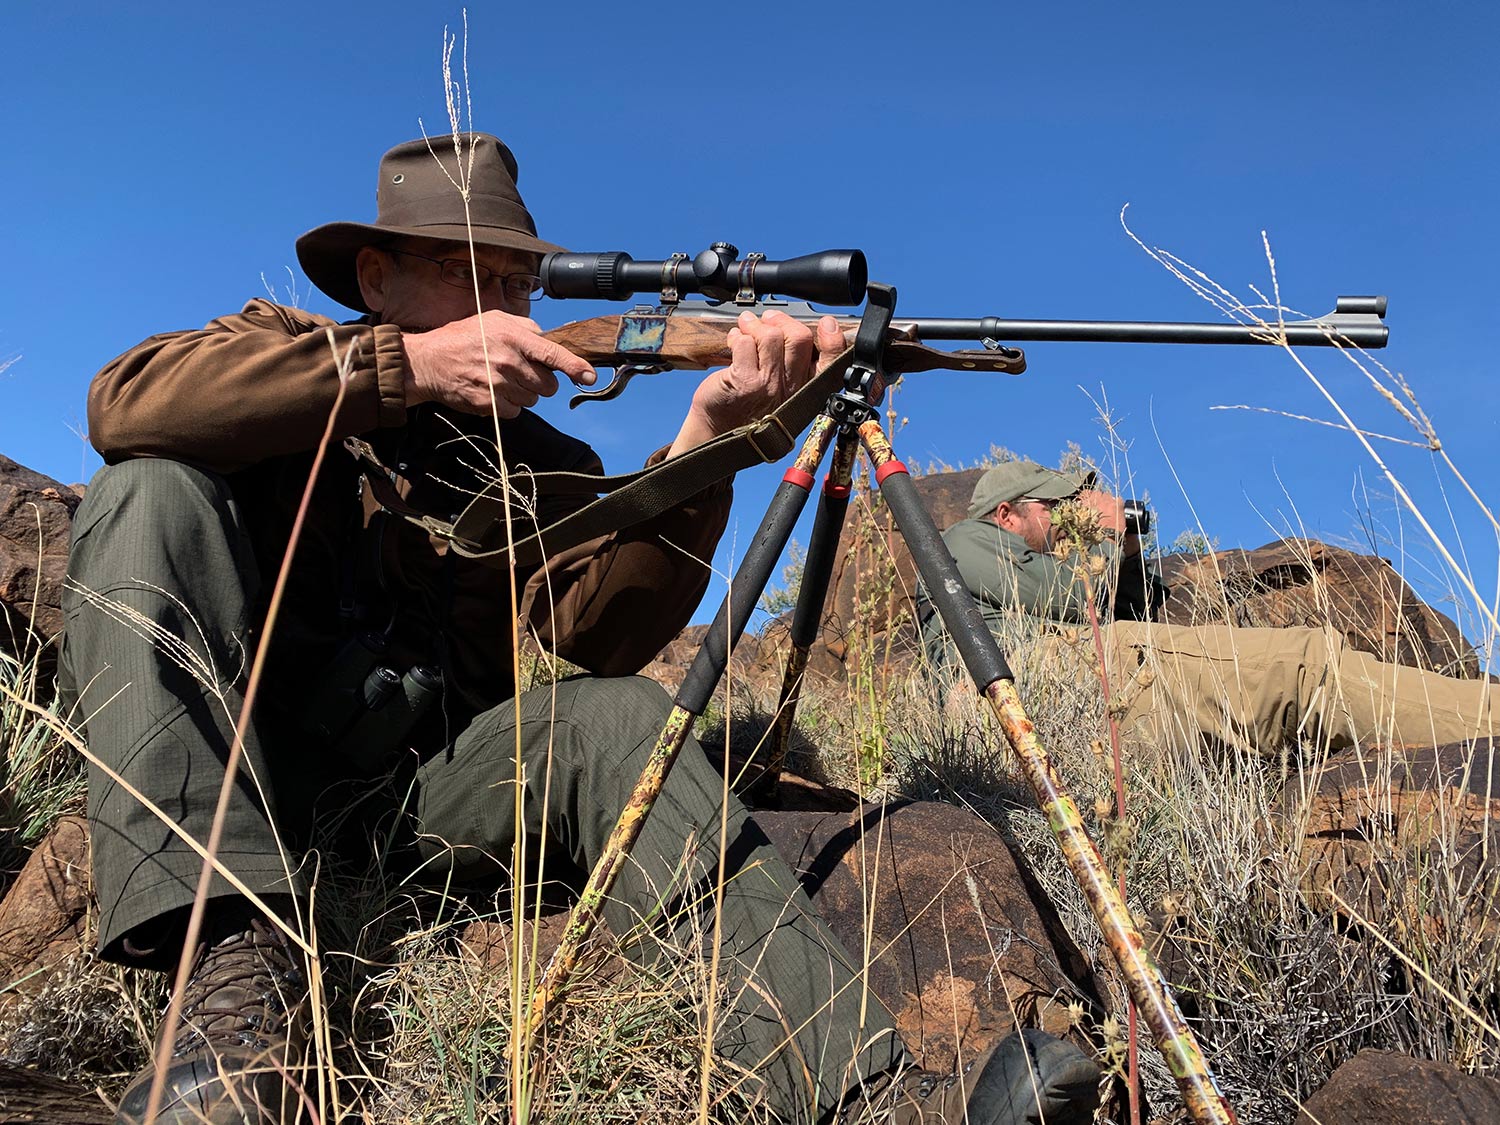 Hunter aiming a rifle using a tripod.